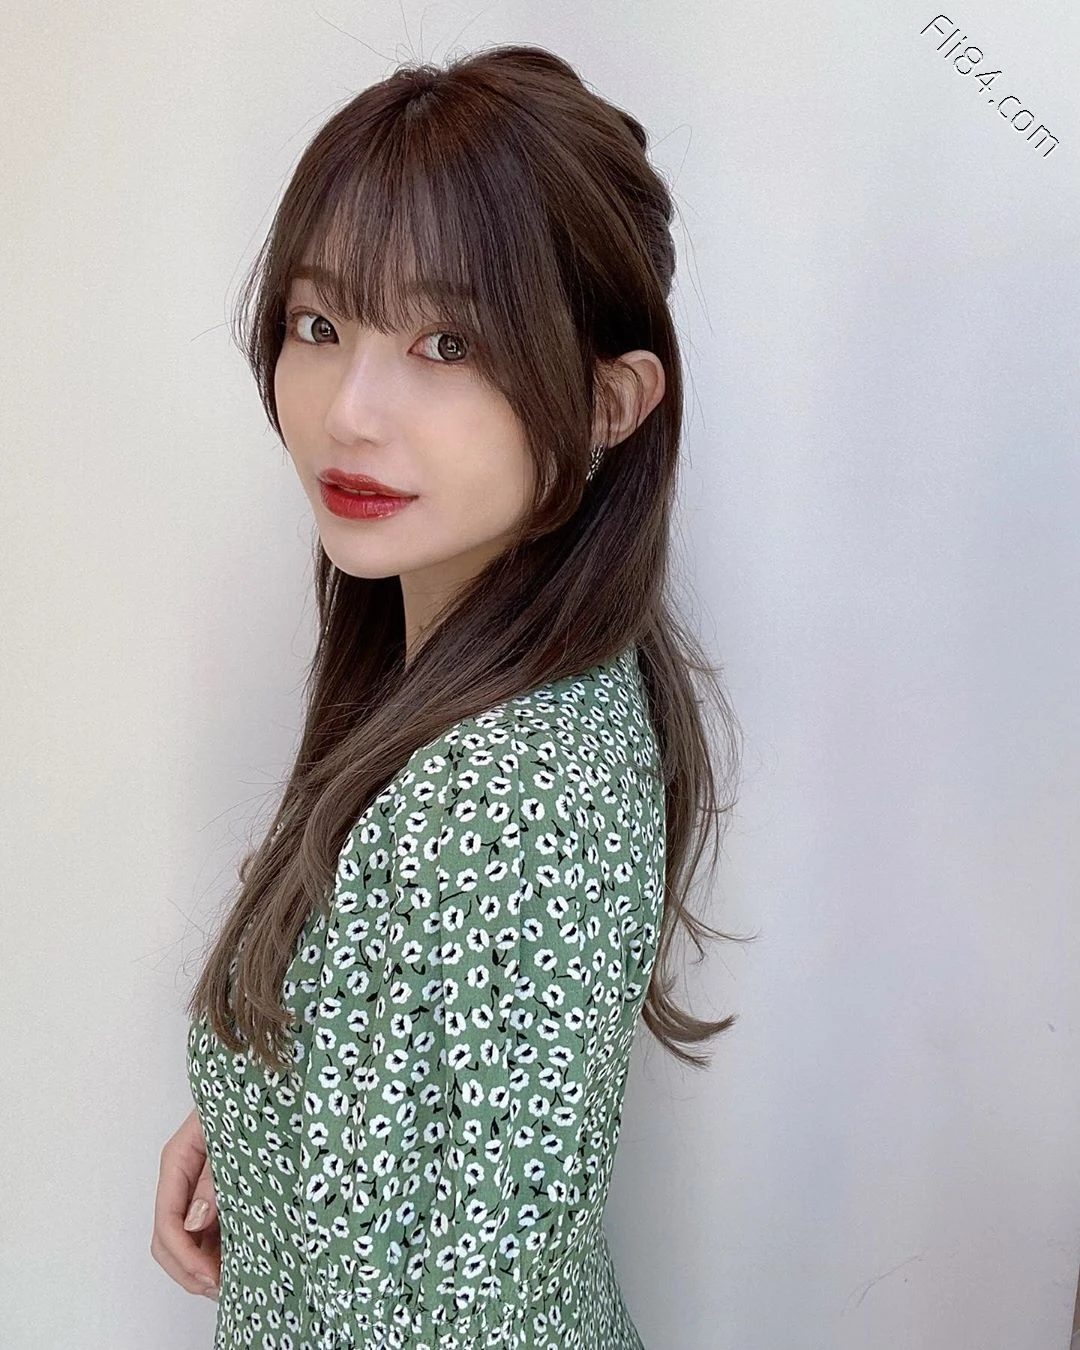 日本美容师@相楽ゆか 卷发红唇性感美女图片(4) 美图 热图7